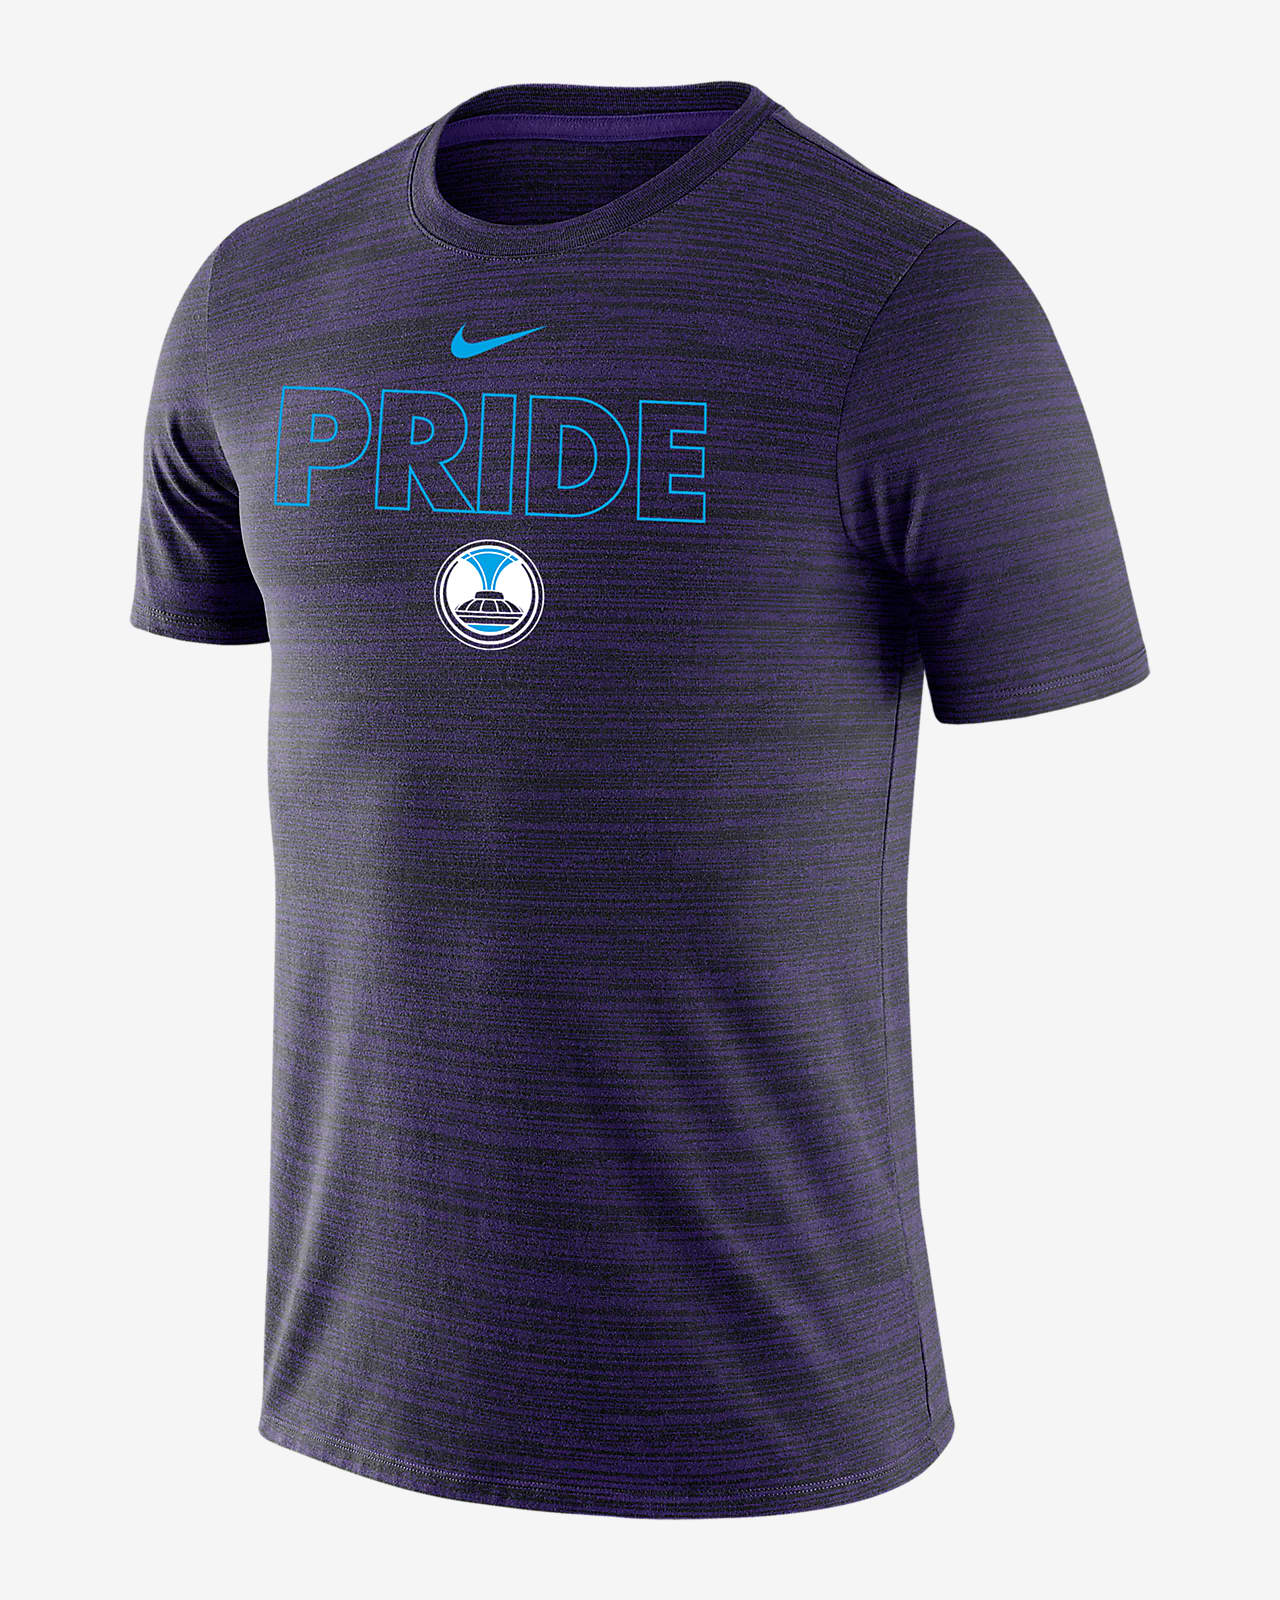 Orlando Pride Velocity Legend Men's Nike Soccer T-Shirt